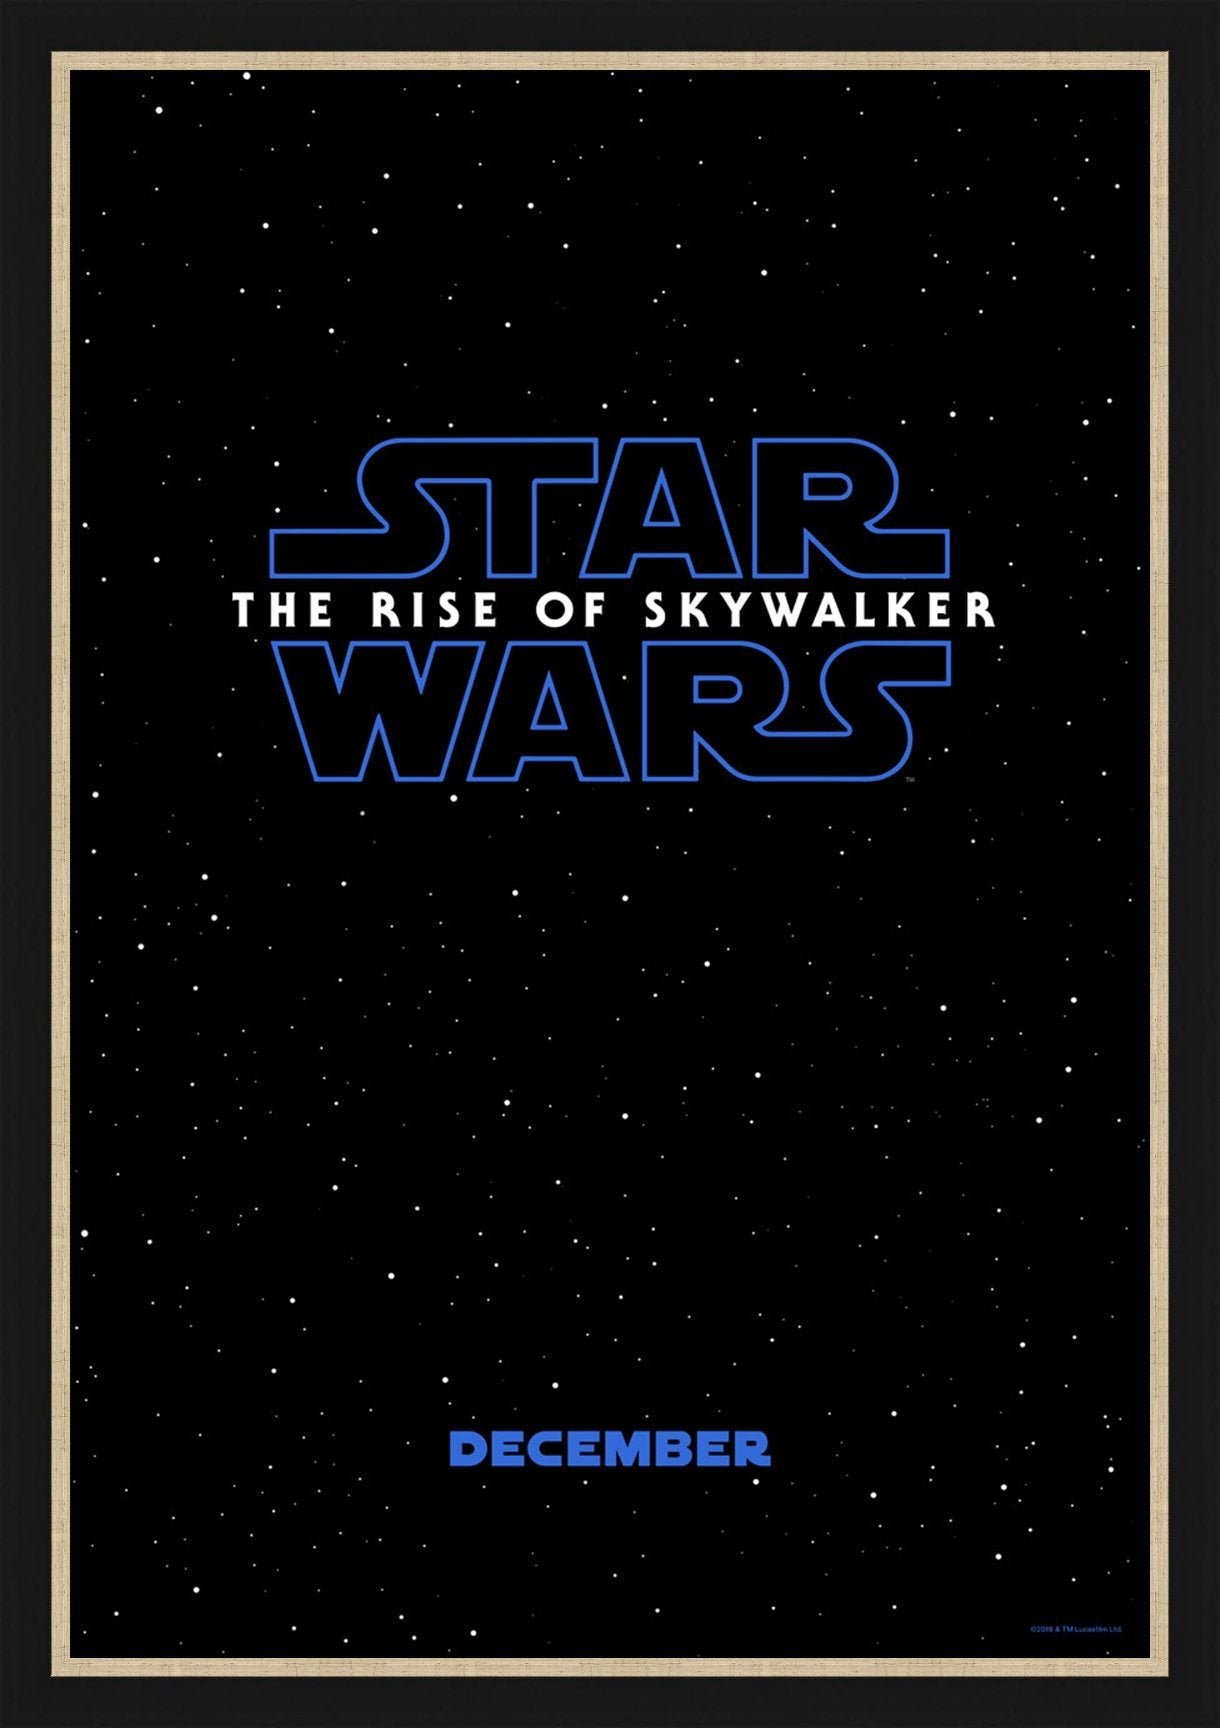 An original teaser movie poster for the Star Wars film The Rise Of Skywalker